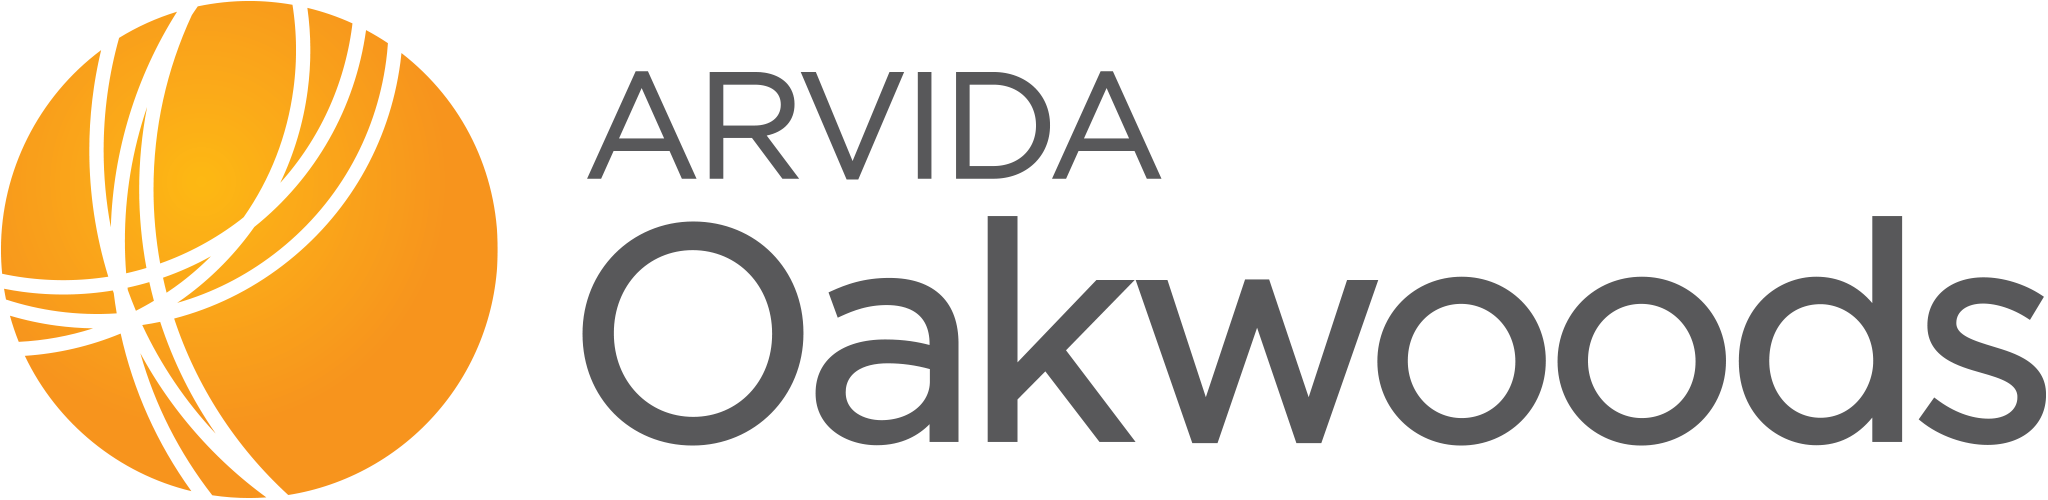 Oakwoods | Arvida logo